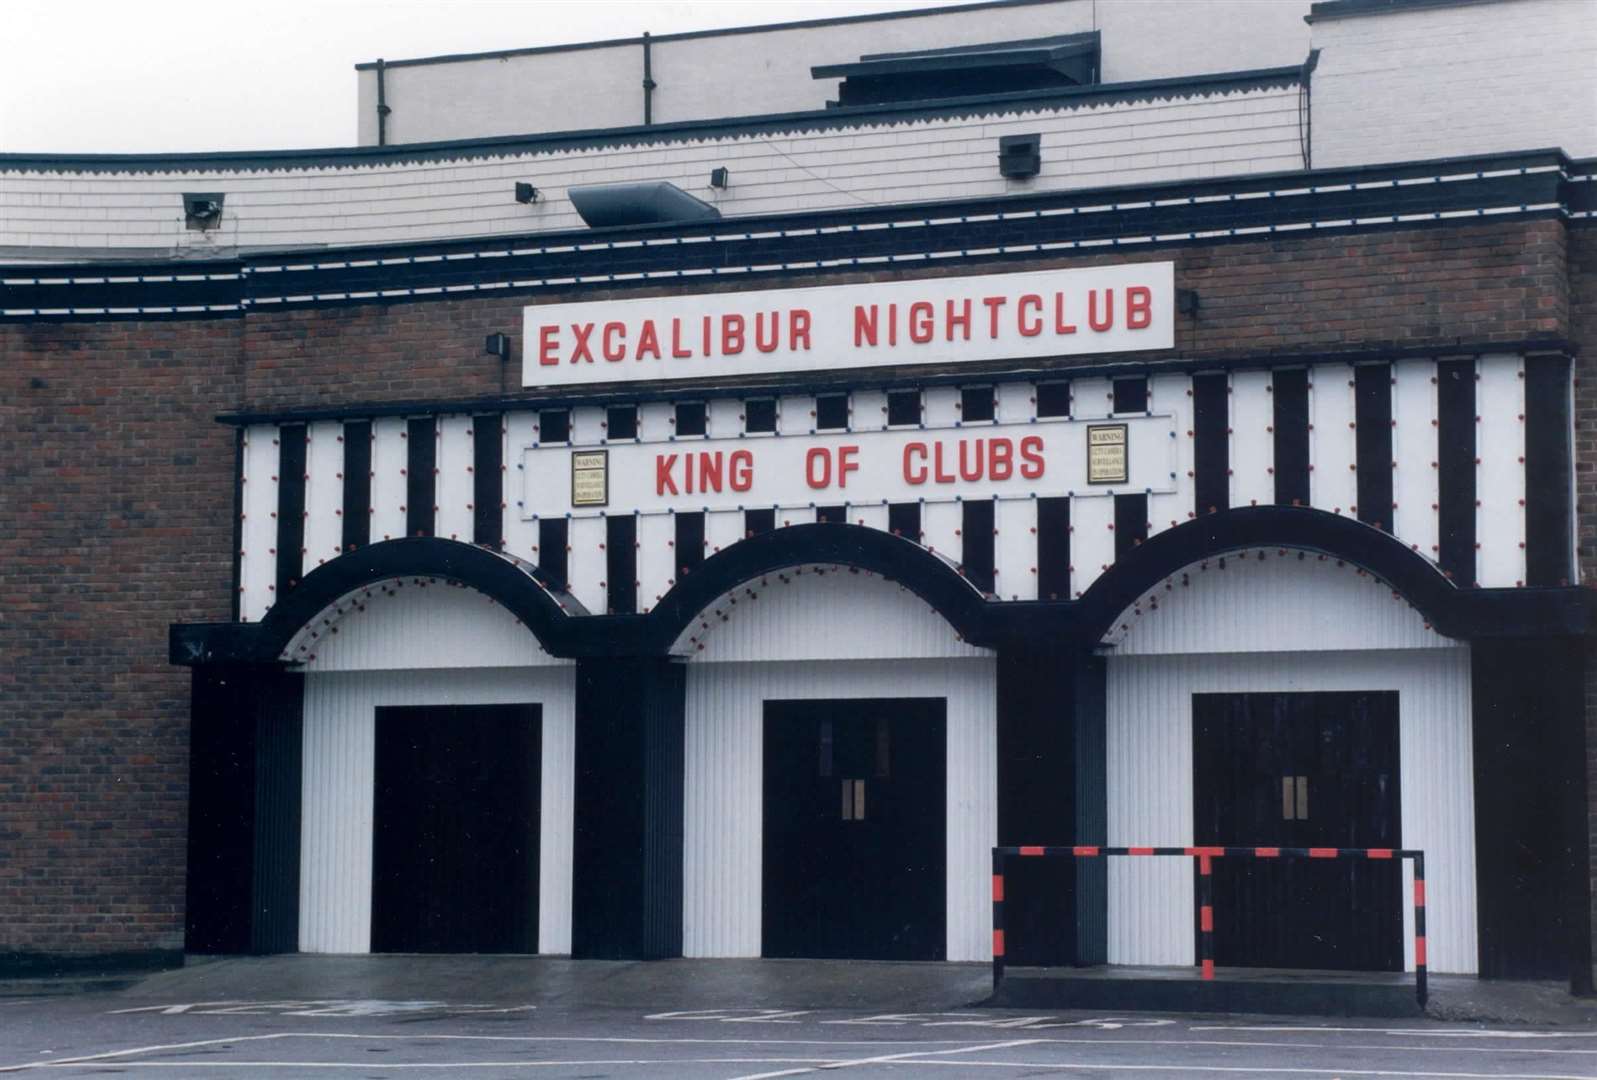 Excalibur Nightclub, Gillingham, Kent